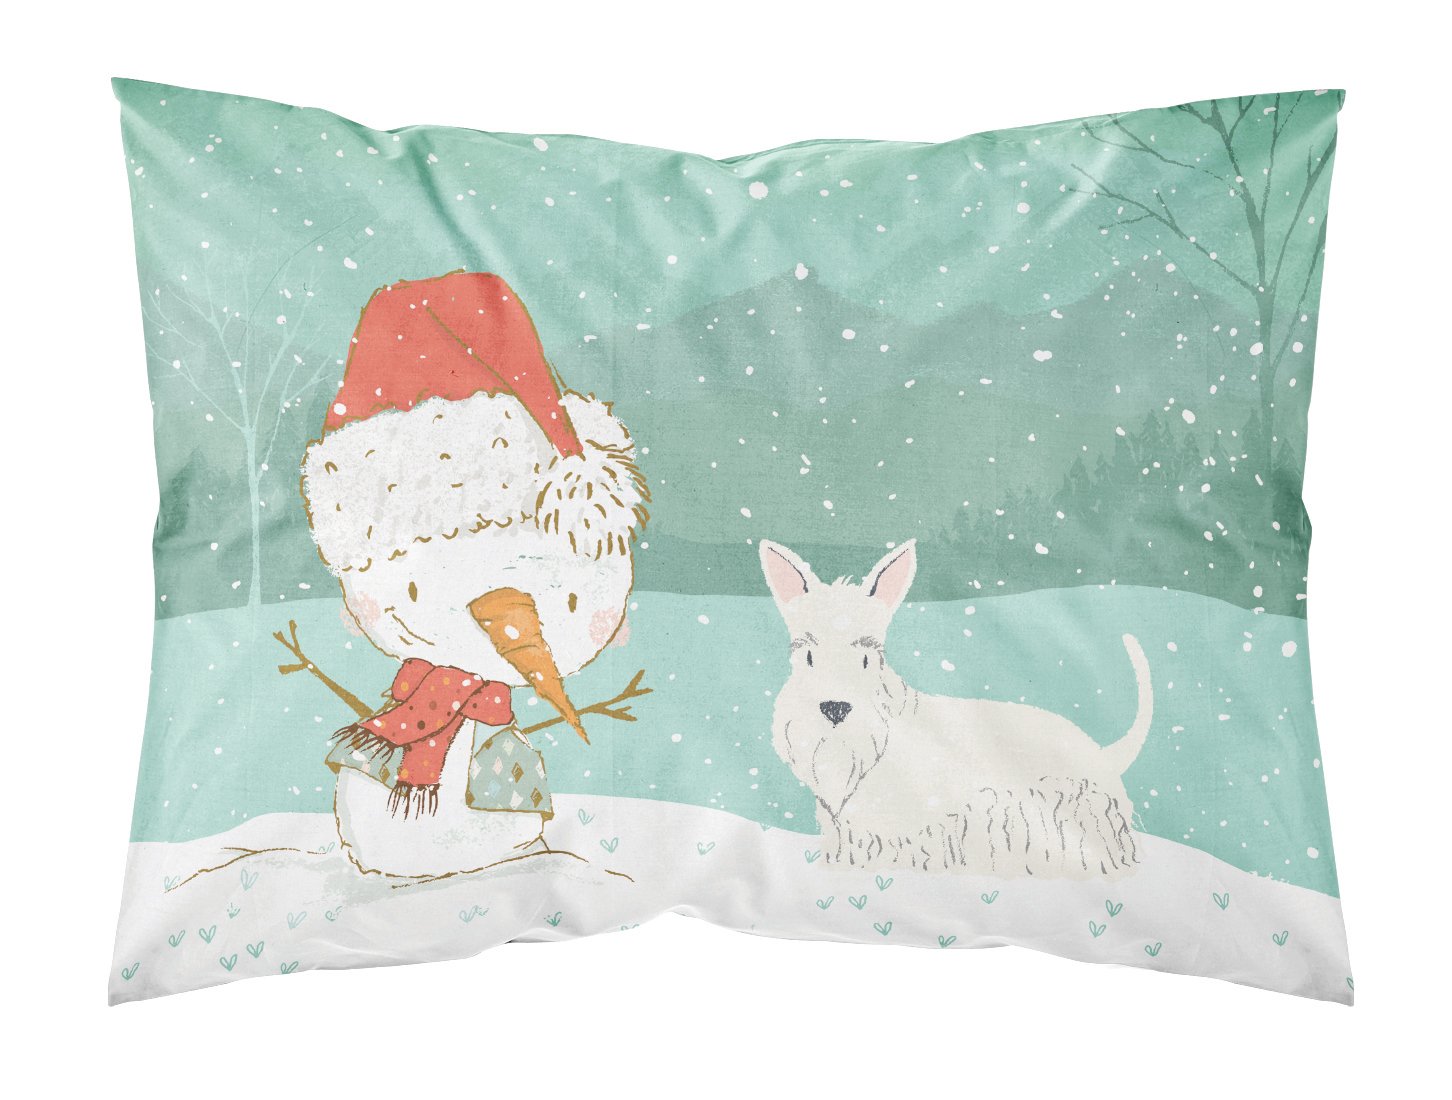 Wheaten Scottish Terrier Snowman Christmas Fabric Standard Pillowcase CK2069PILLOWCASE by Caroline's Treasures